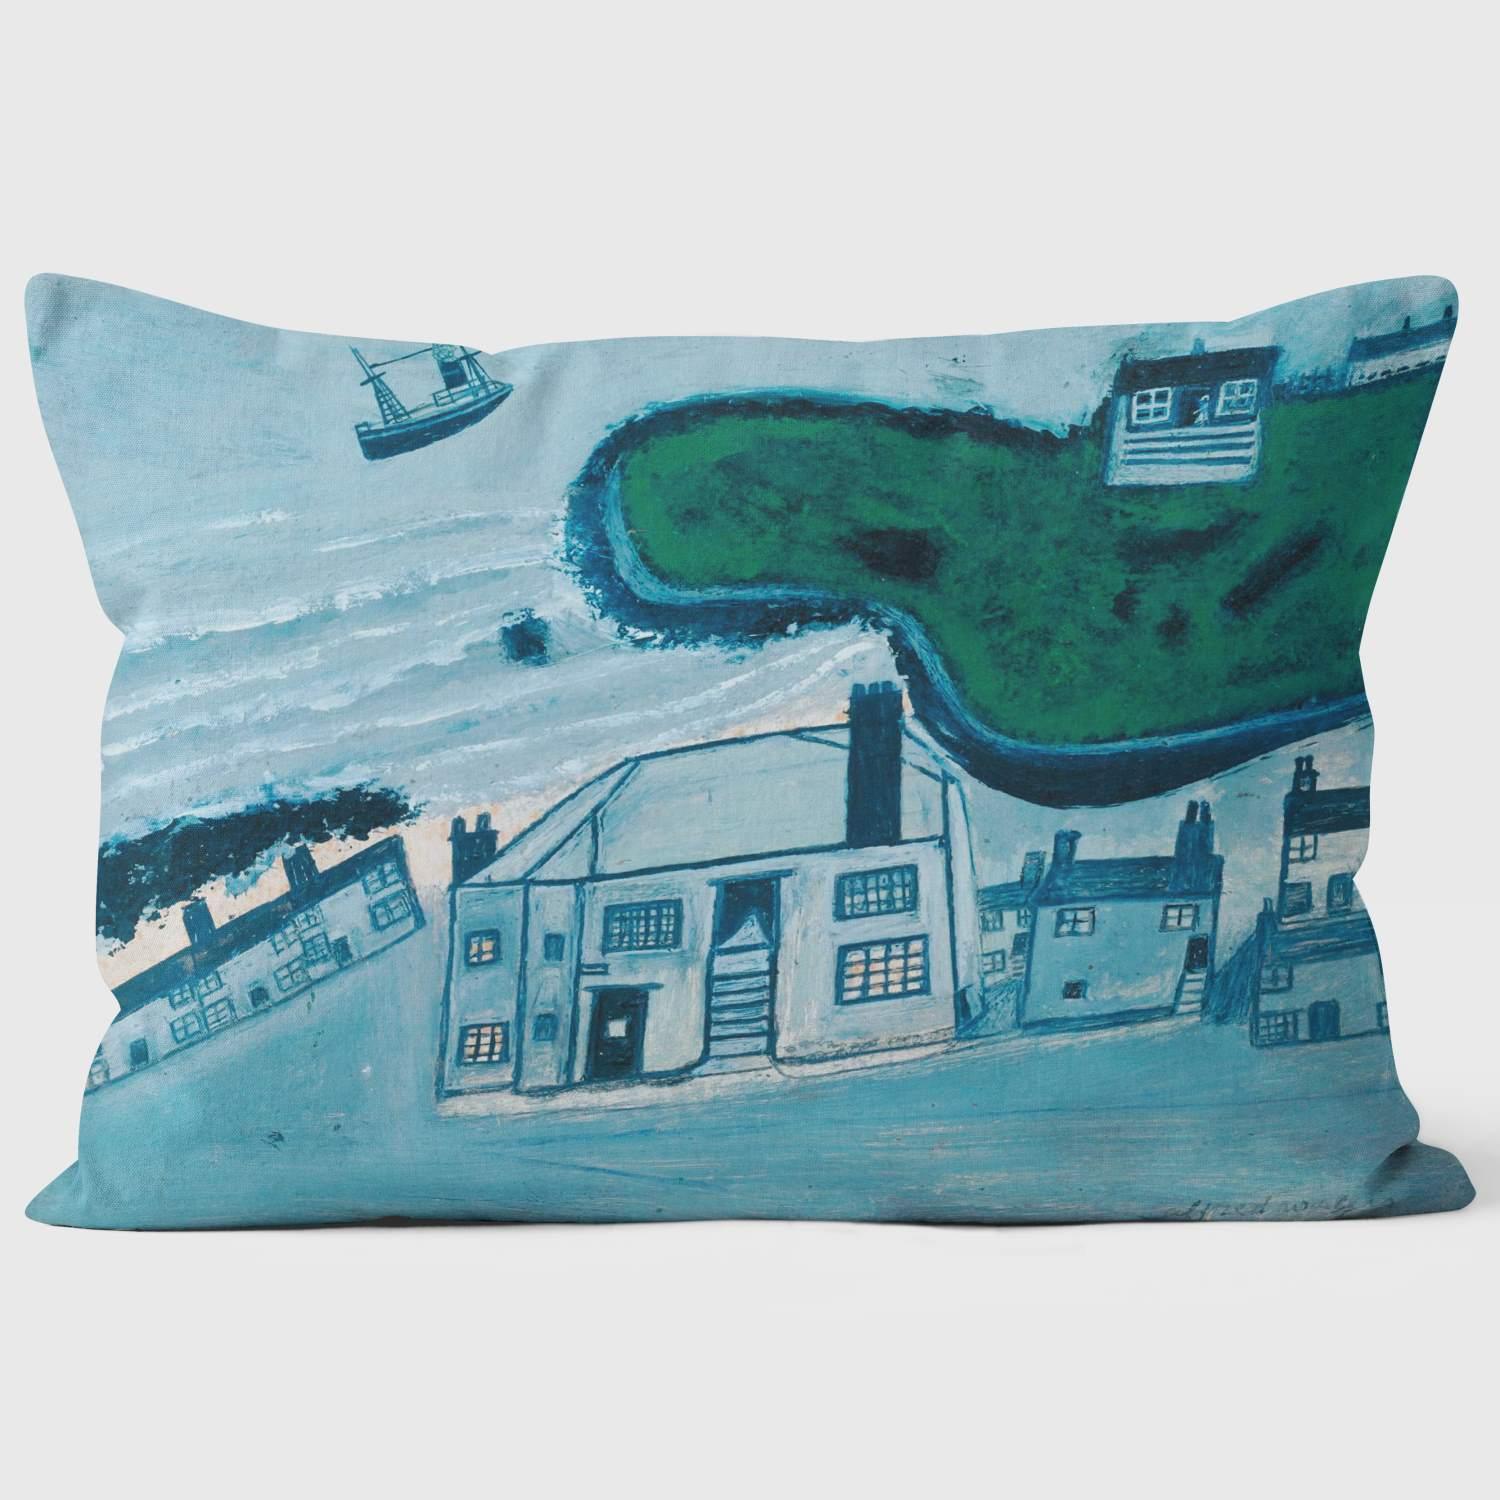 The Hold House - Alfred Wallis - Tate St.Ives Cushion - Handmade Cushions UK - WeLoveCushions